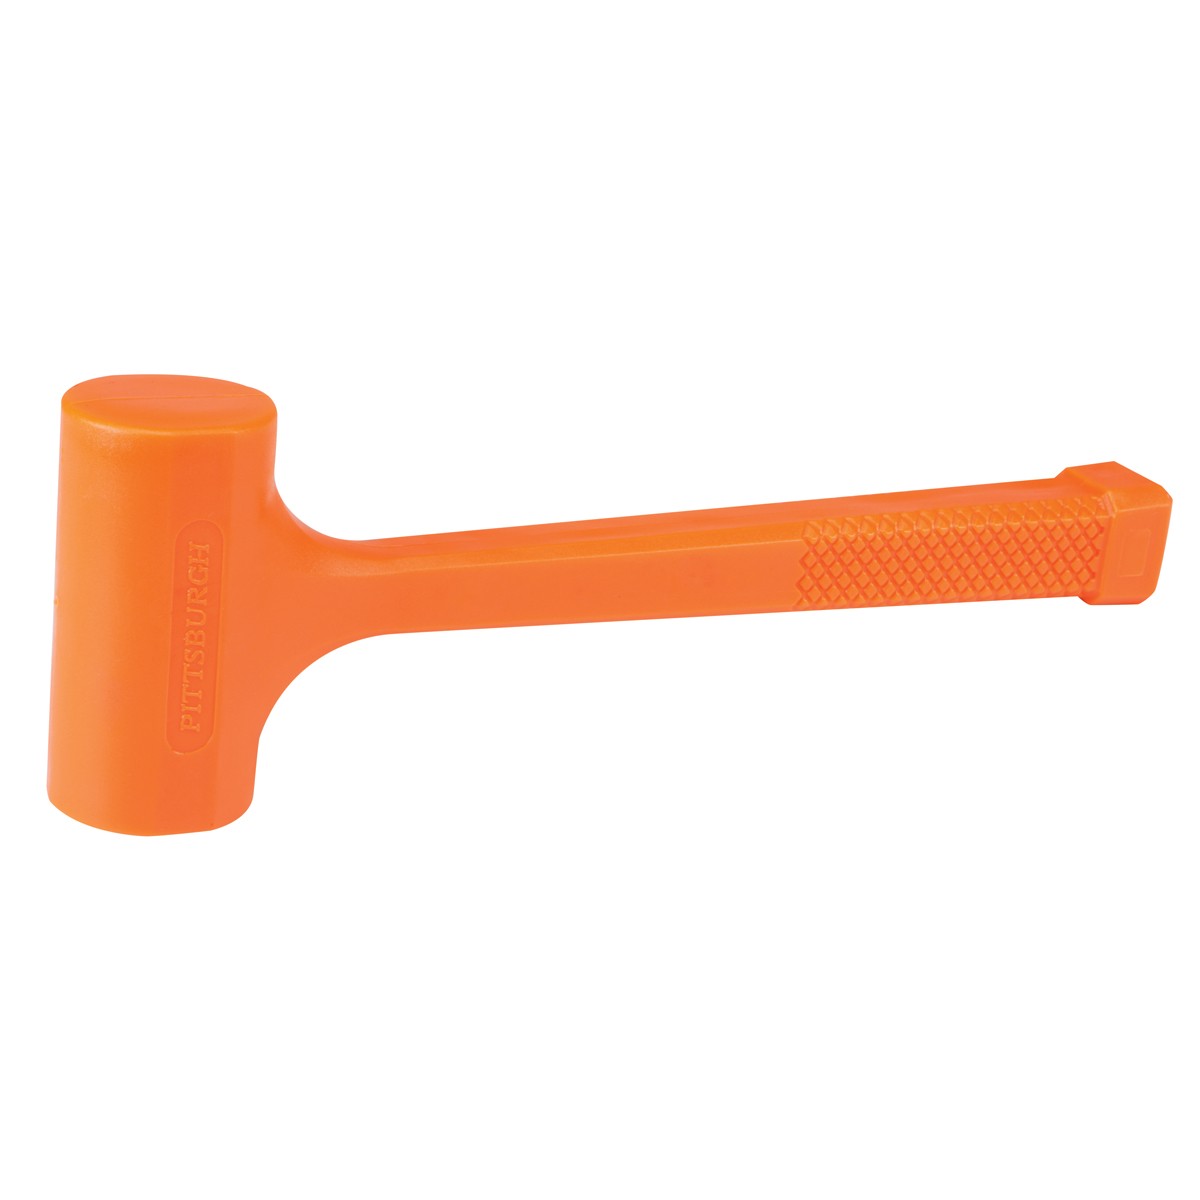 1-1/2 lb. Neon Orange Dead Blow Hammer